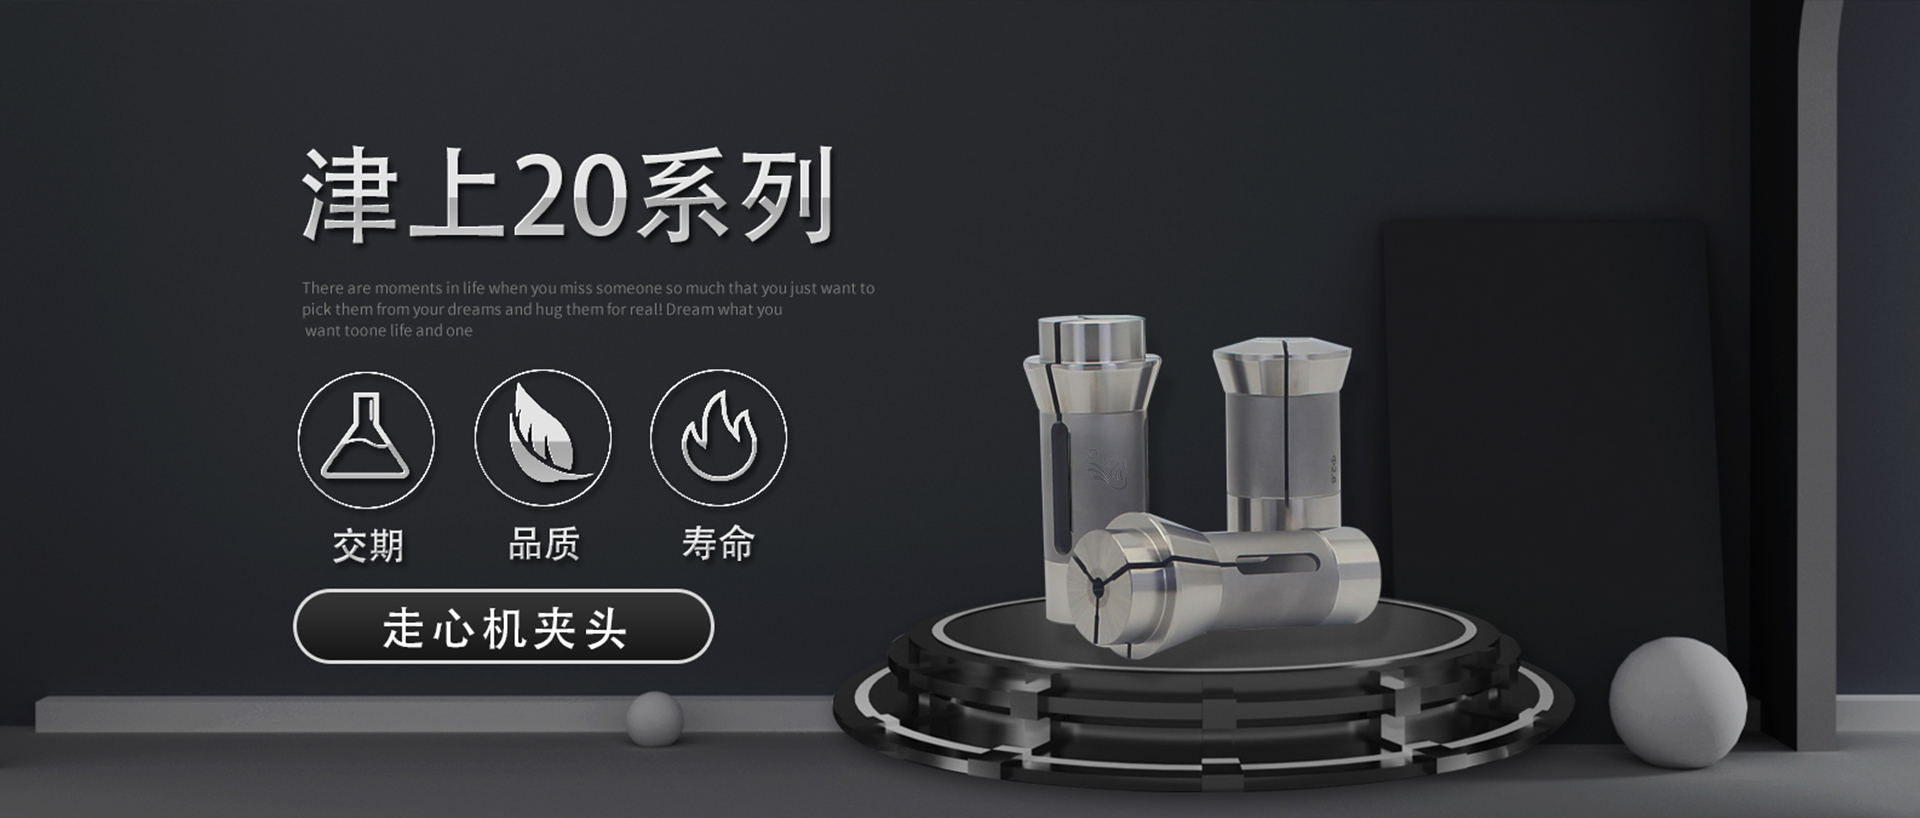 RESTCLOUD - Chengdu YiShouWeiSheng Technology Co., Ltd Trademark  Registration